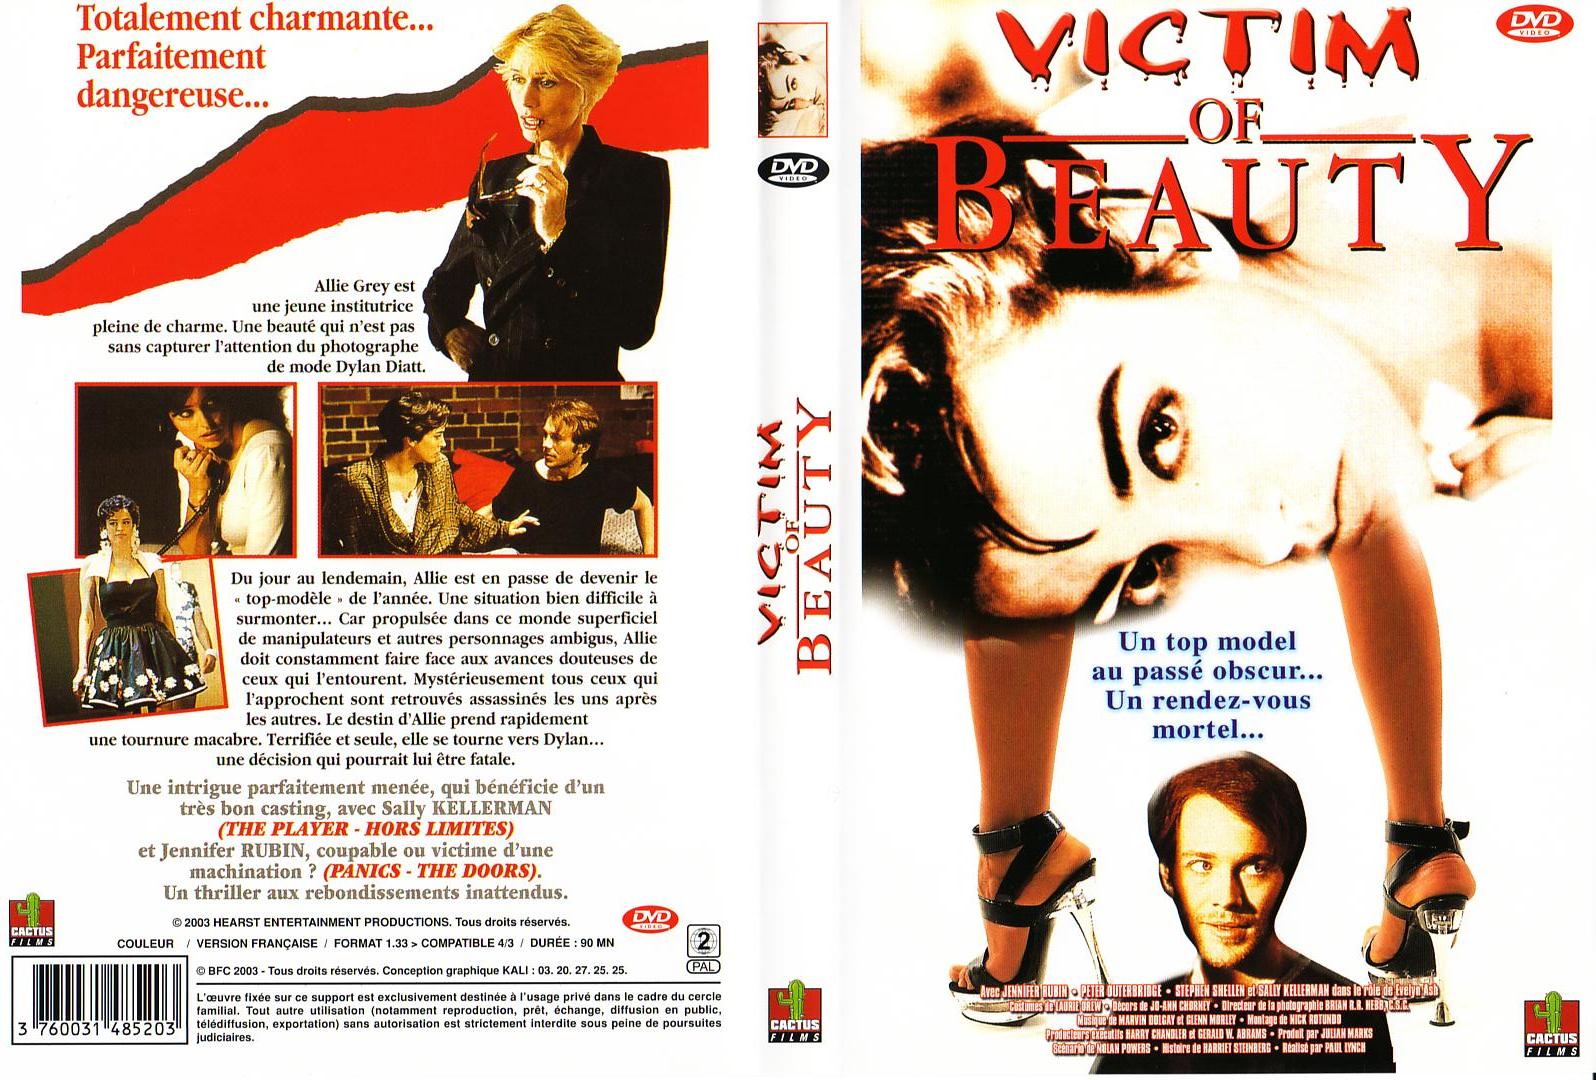 Jaquette DVD Victim of beauty